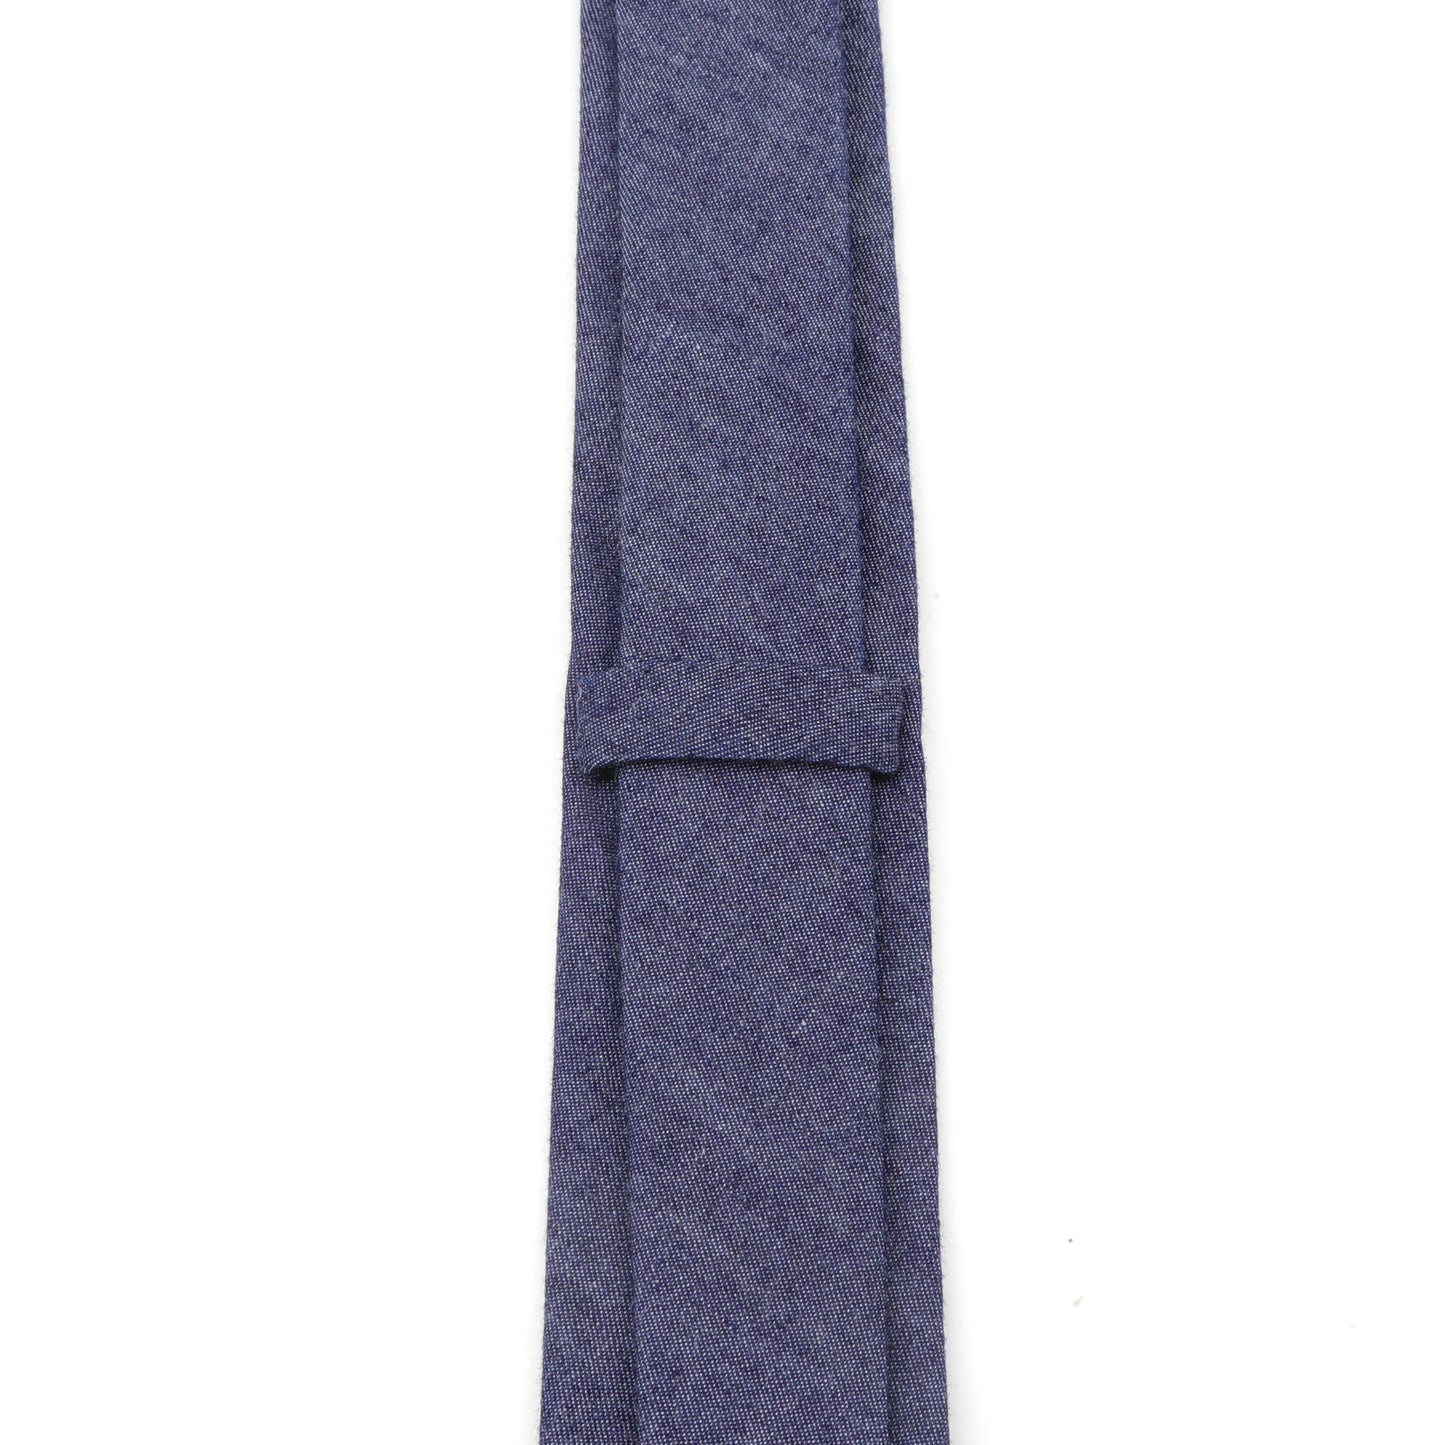 Casual Chic: Linen/Cotton Tie & Clip Set for Leisure & Business